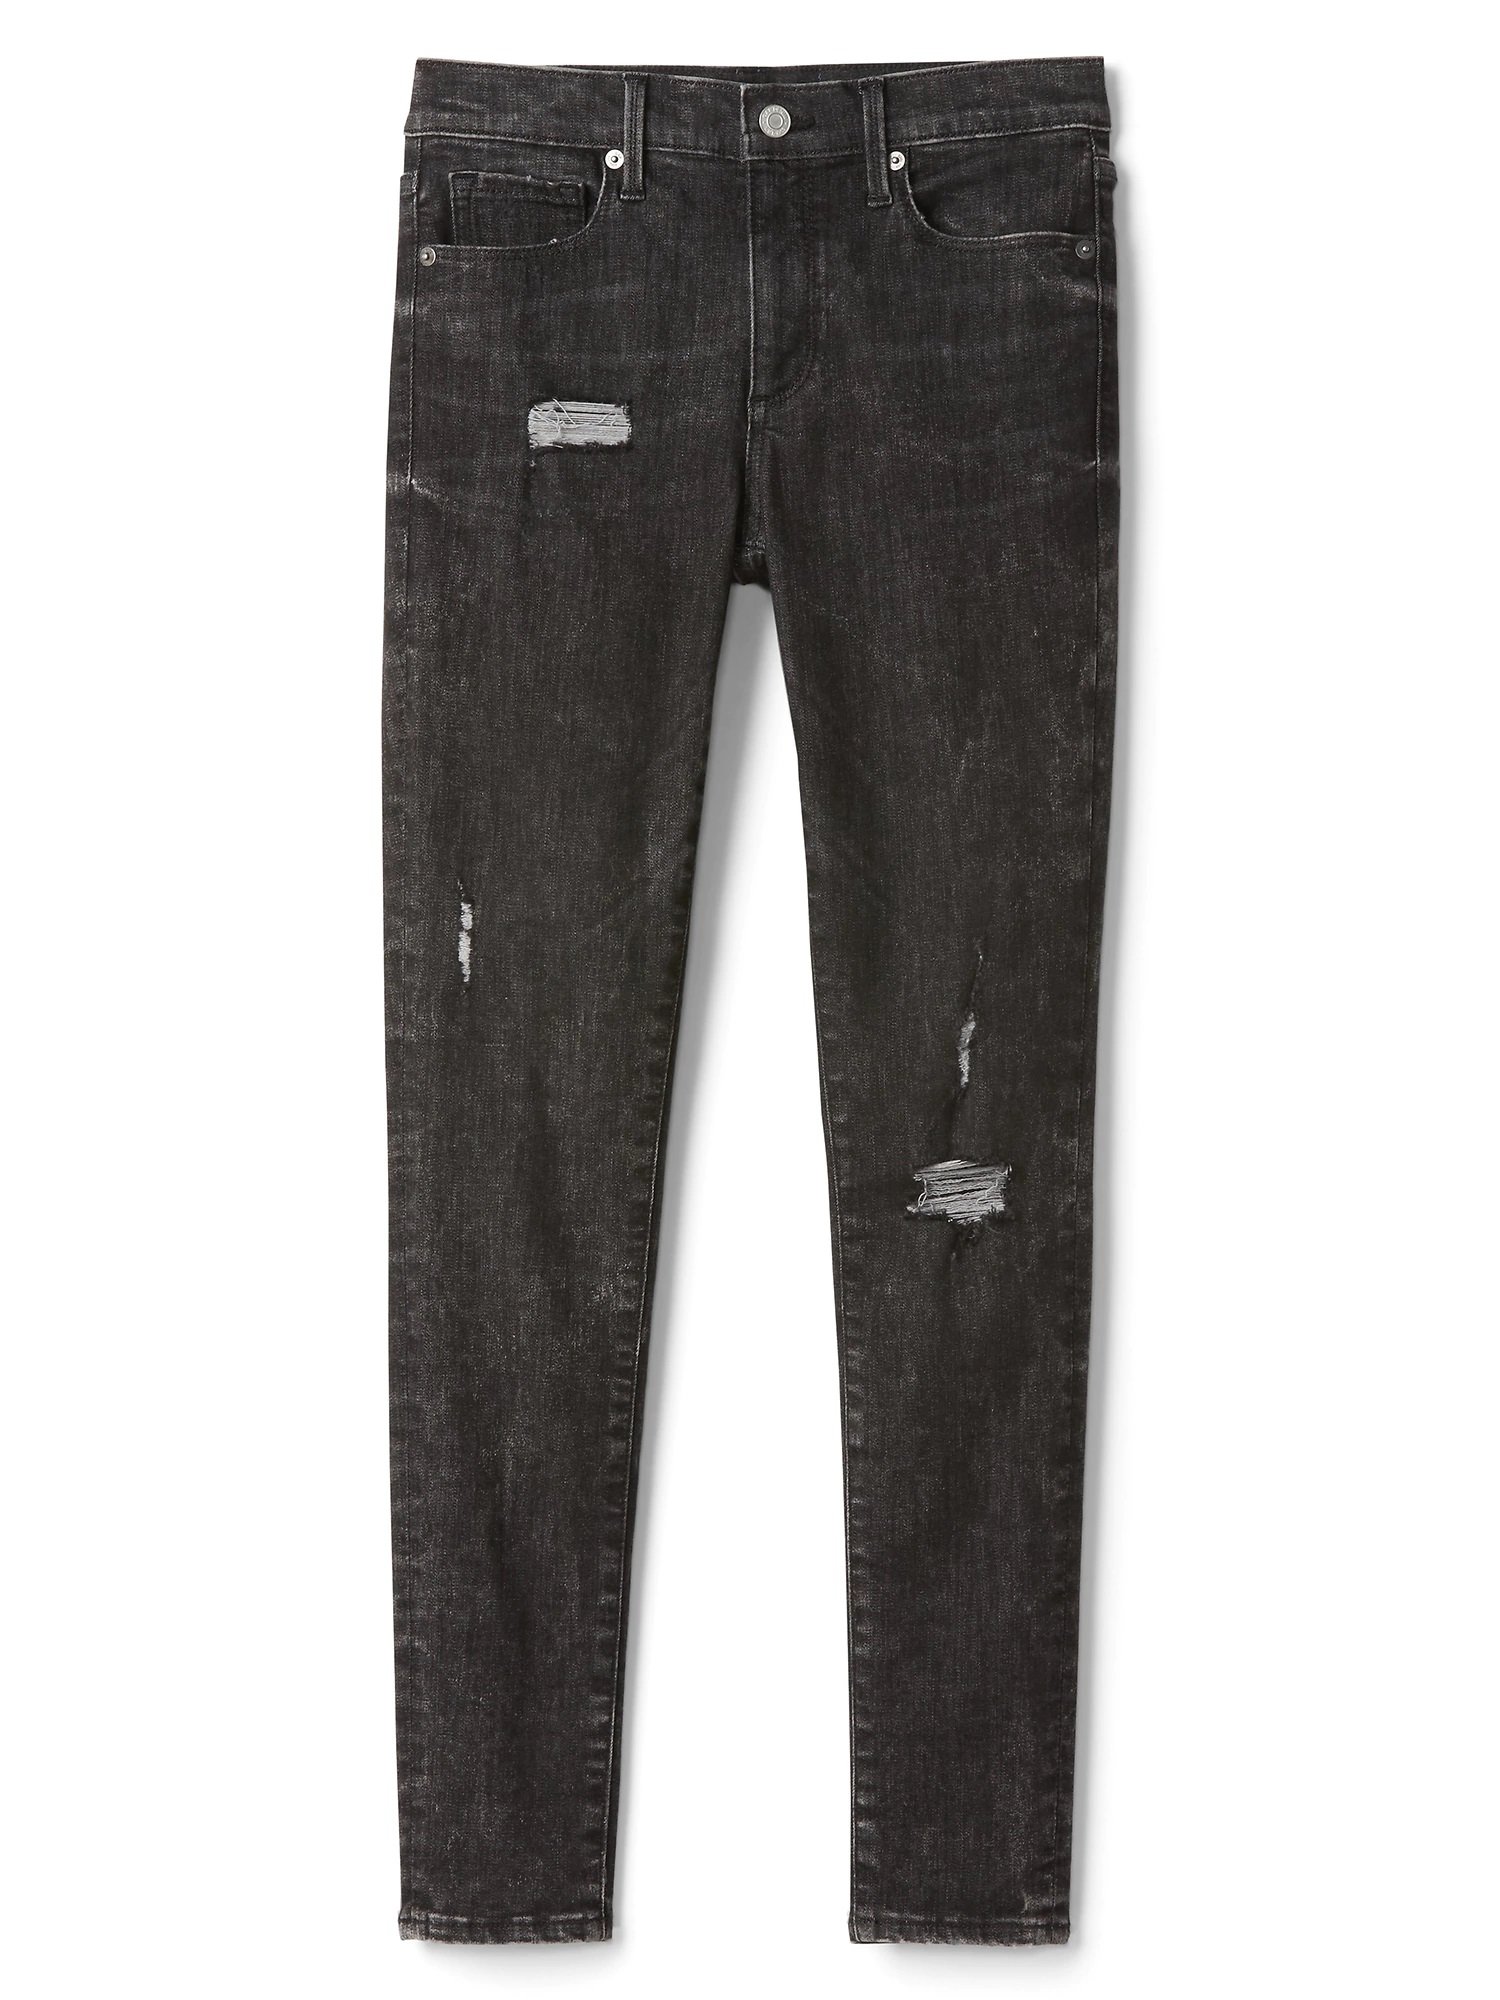 Orta belli Sculpt true skinny jean pantolon product image